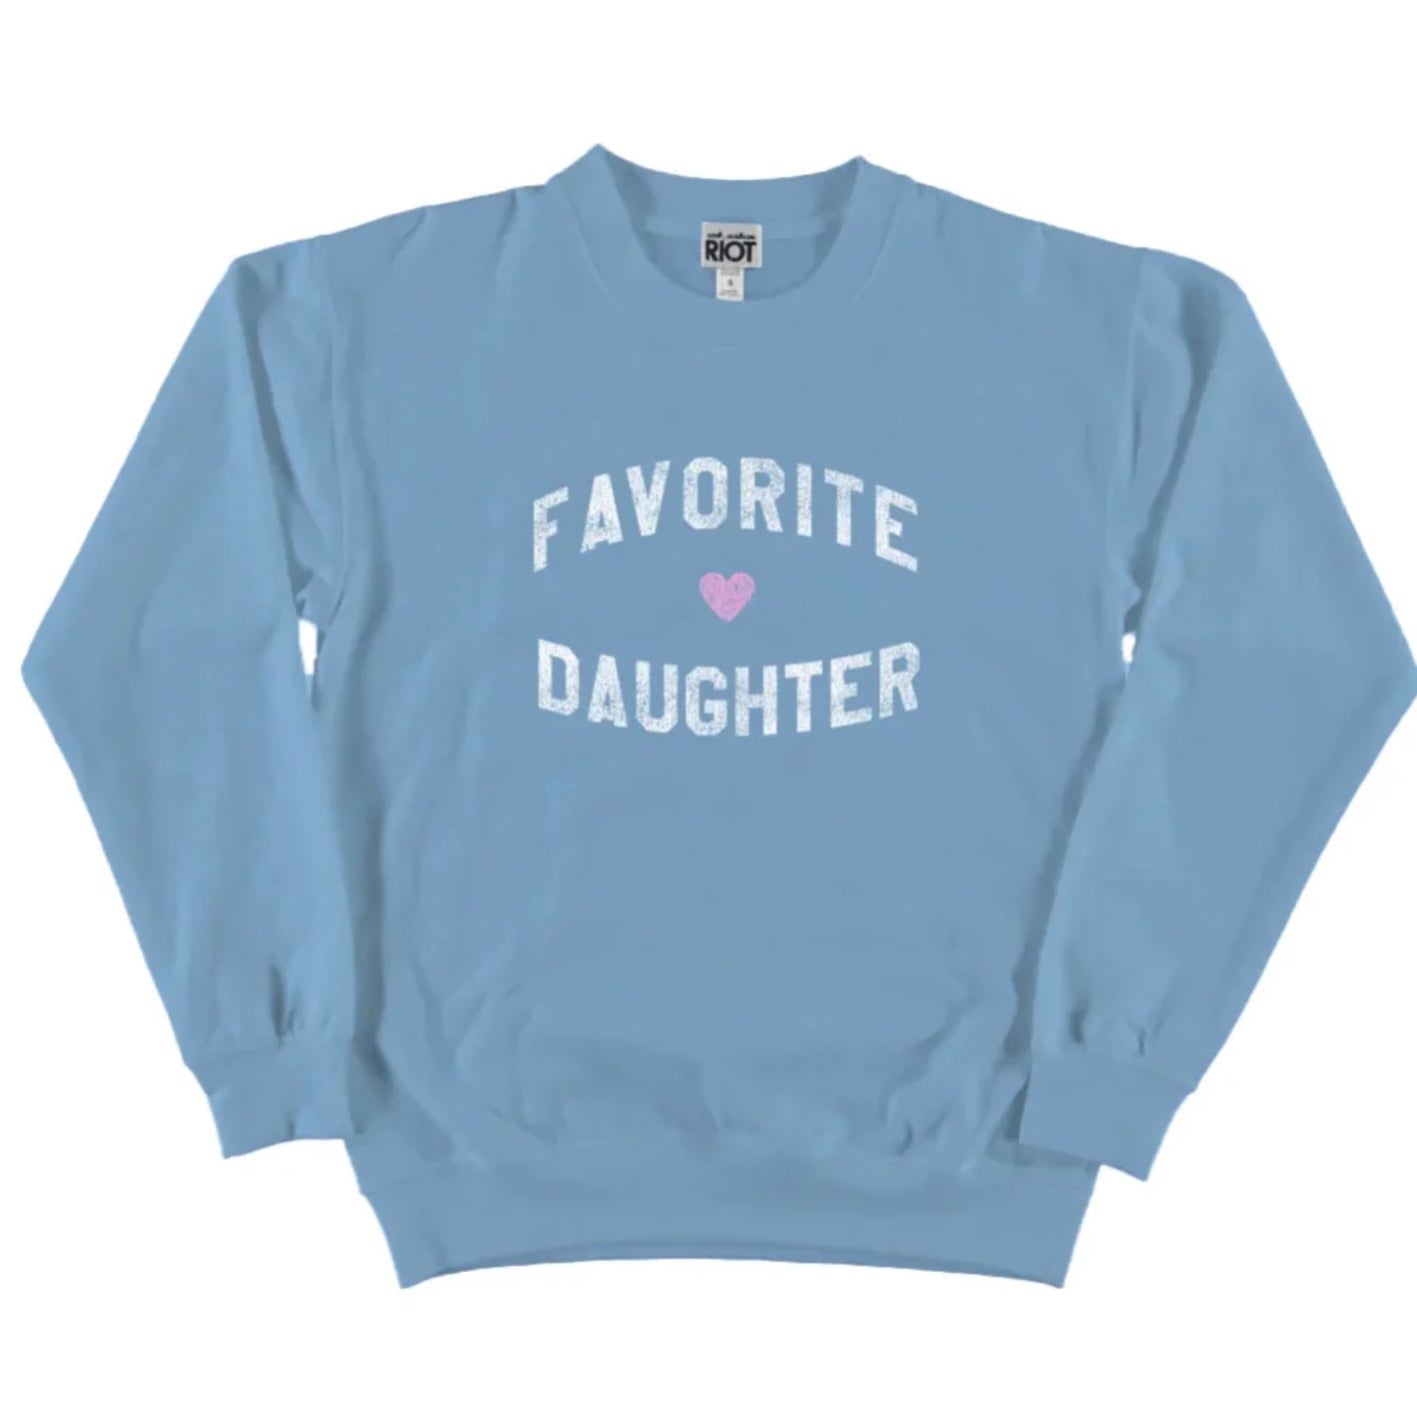 Favorite Daughter Sweatshirt - Light Blue